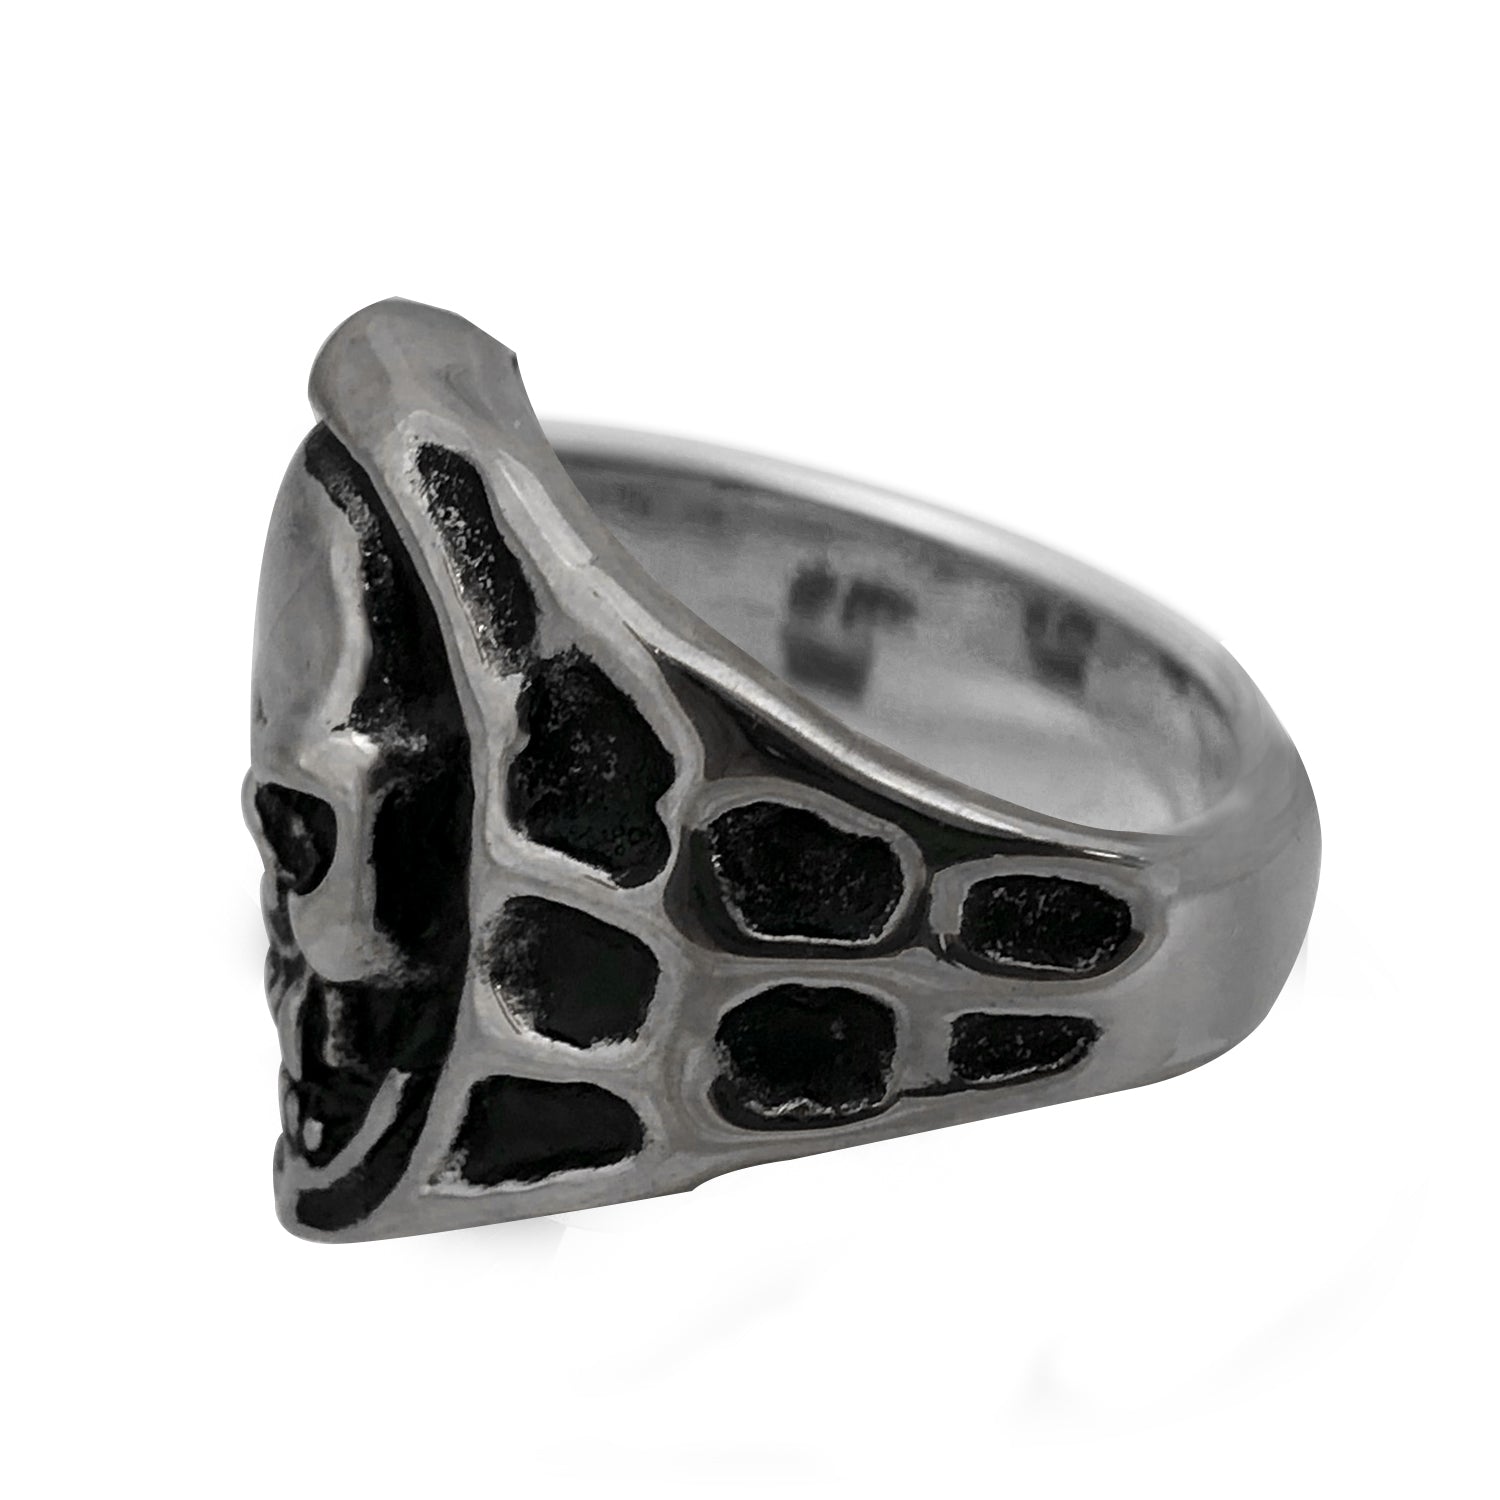 Seven Seas Pirates Skull Steel Black Enameled Ring (US Size 13 R132)